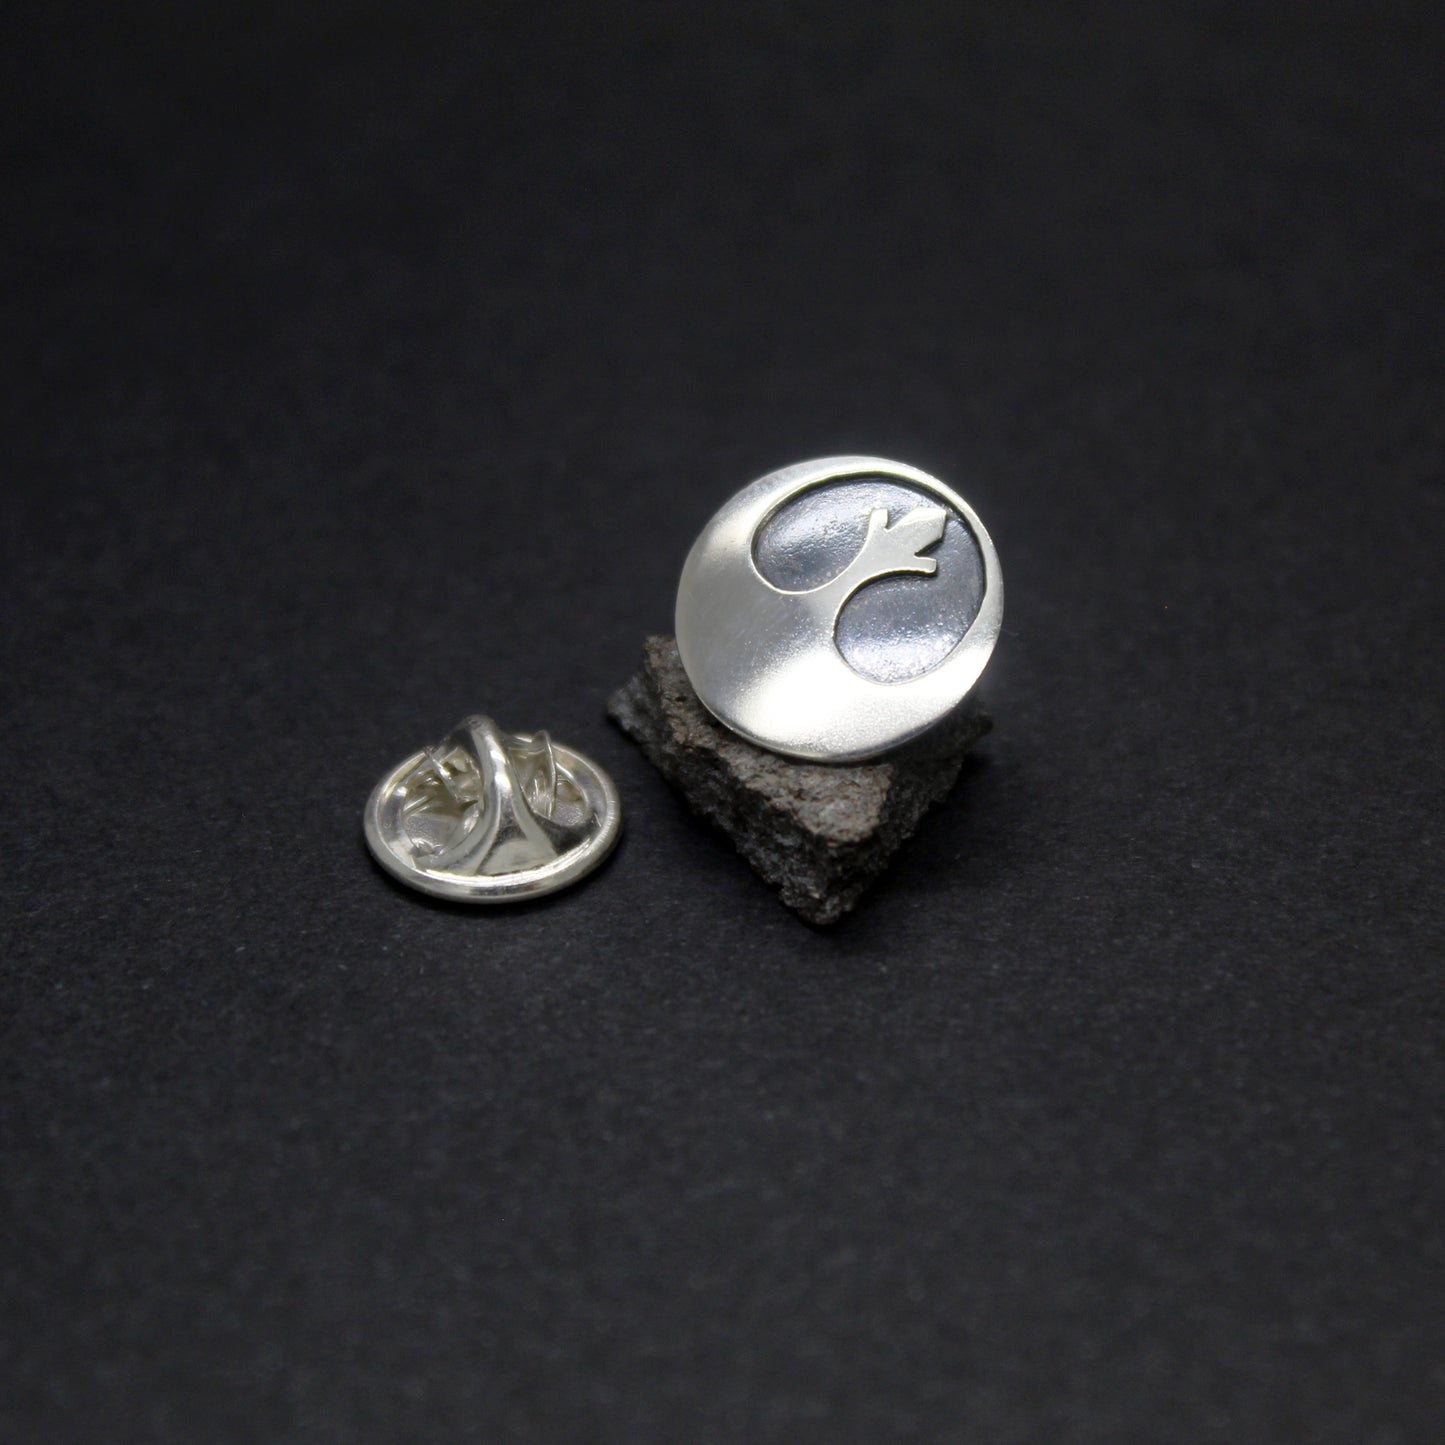 Rebel Alliance symbol Star Wars PIN in 925 silver